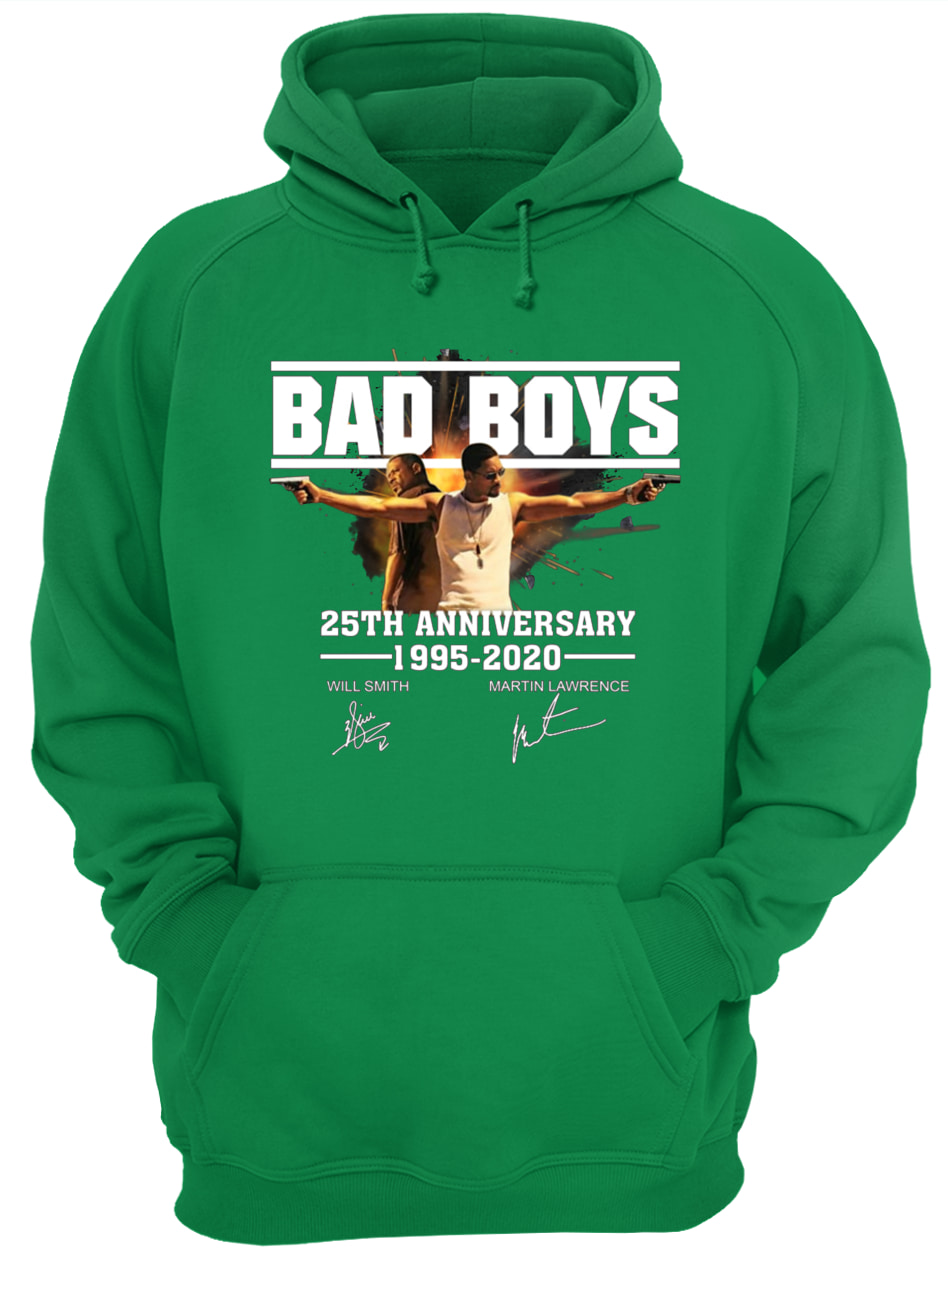 Bad boys 25th anniversary 1995-2020 signatures hoodie